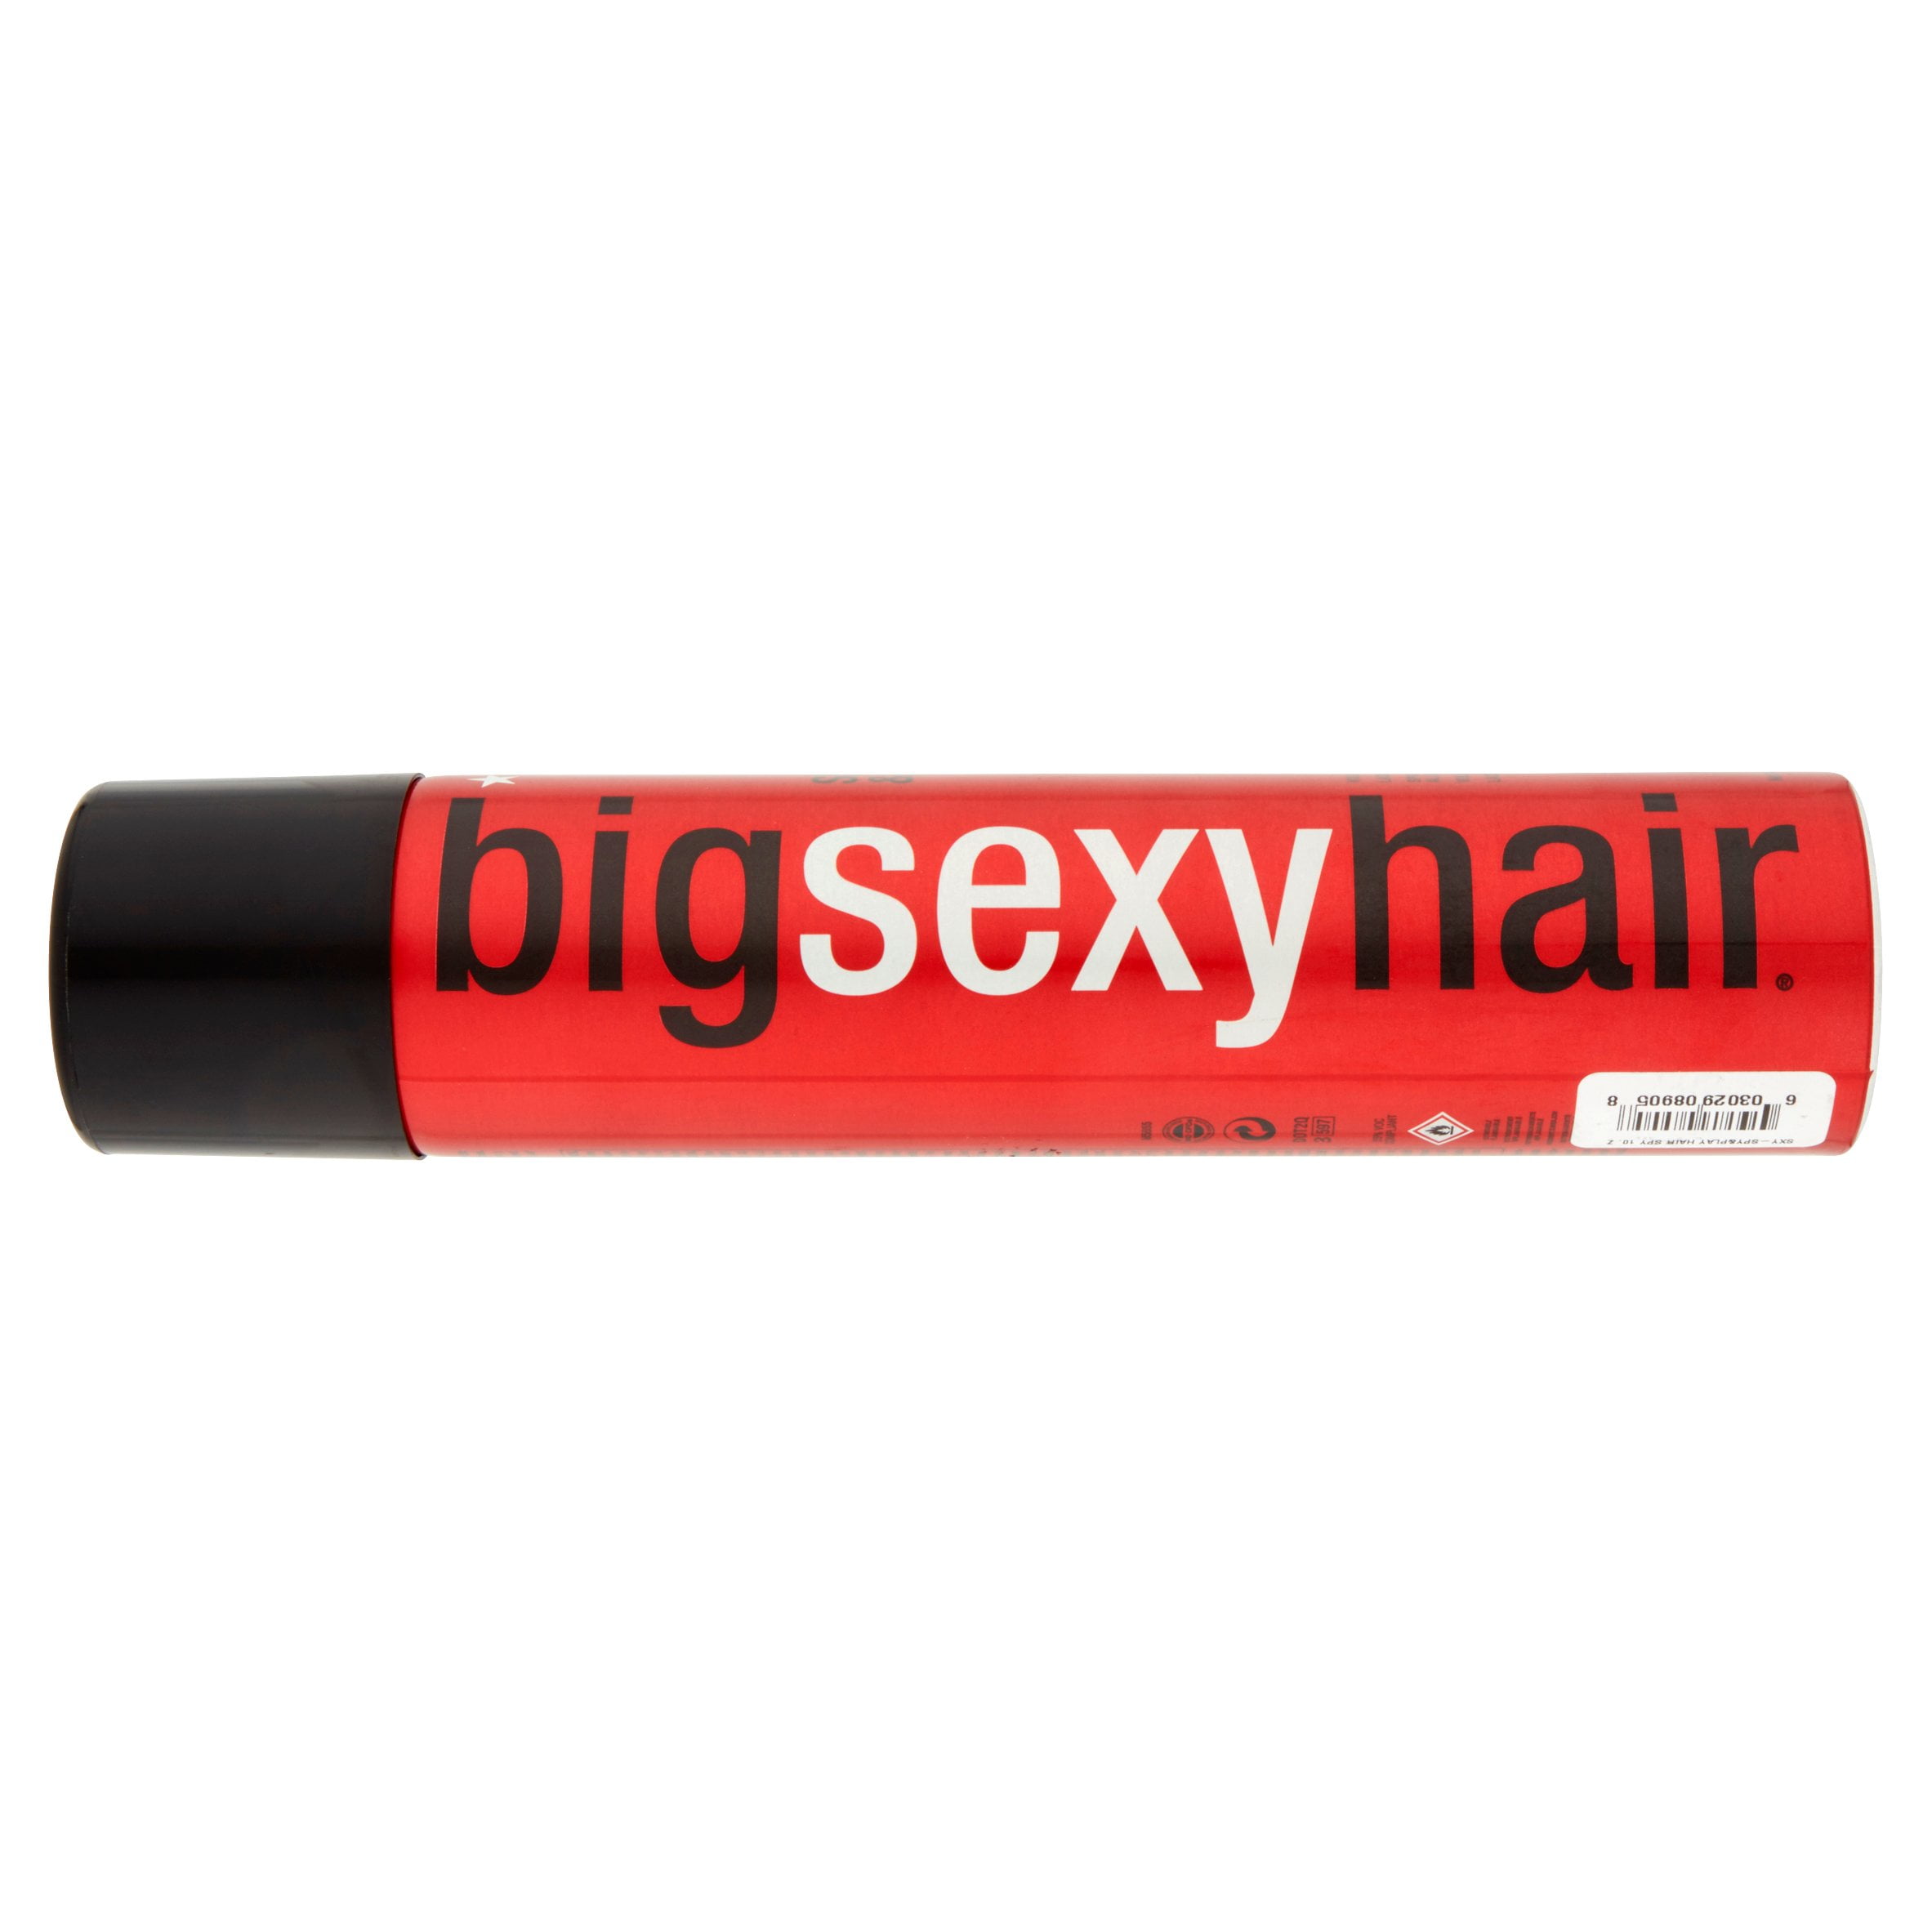 Big Sexy Hair Spray And Play Hairspray Volumizing Hairspray 8oz 3 Pack, 1 -  Harris Teeter